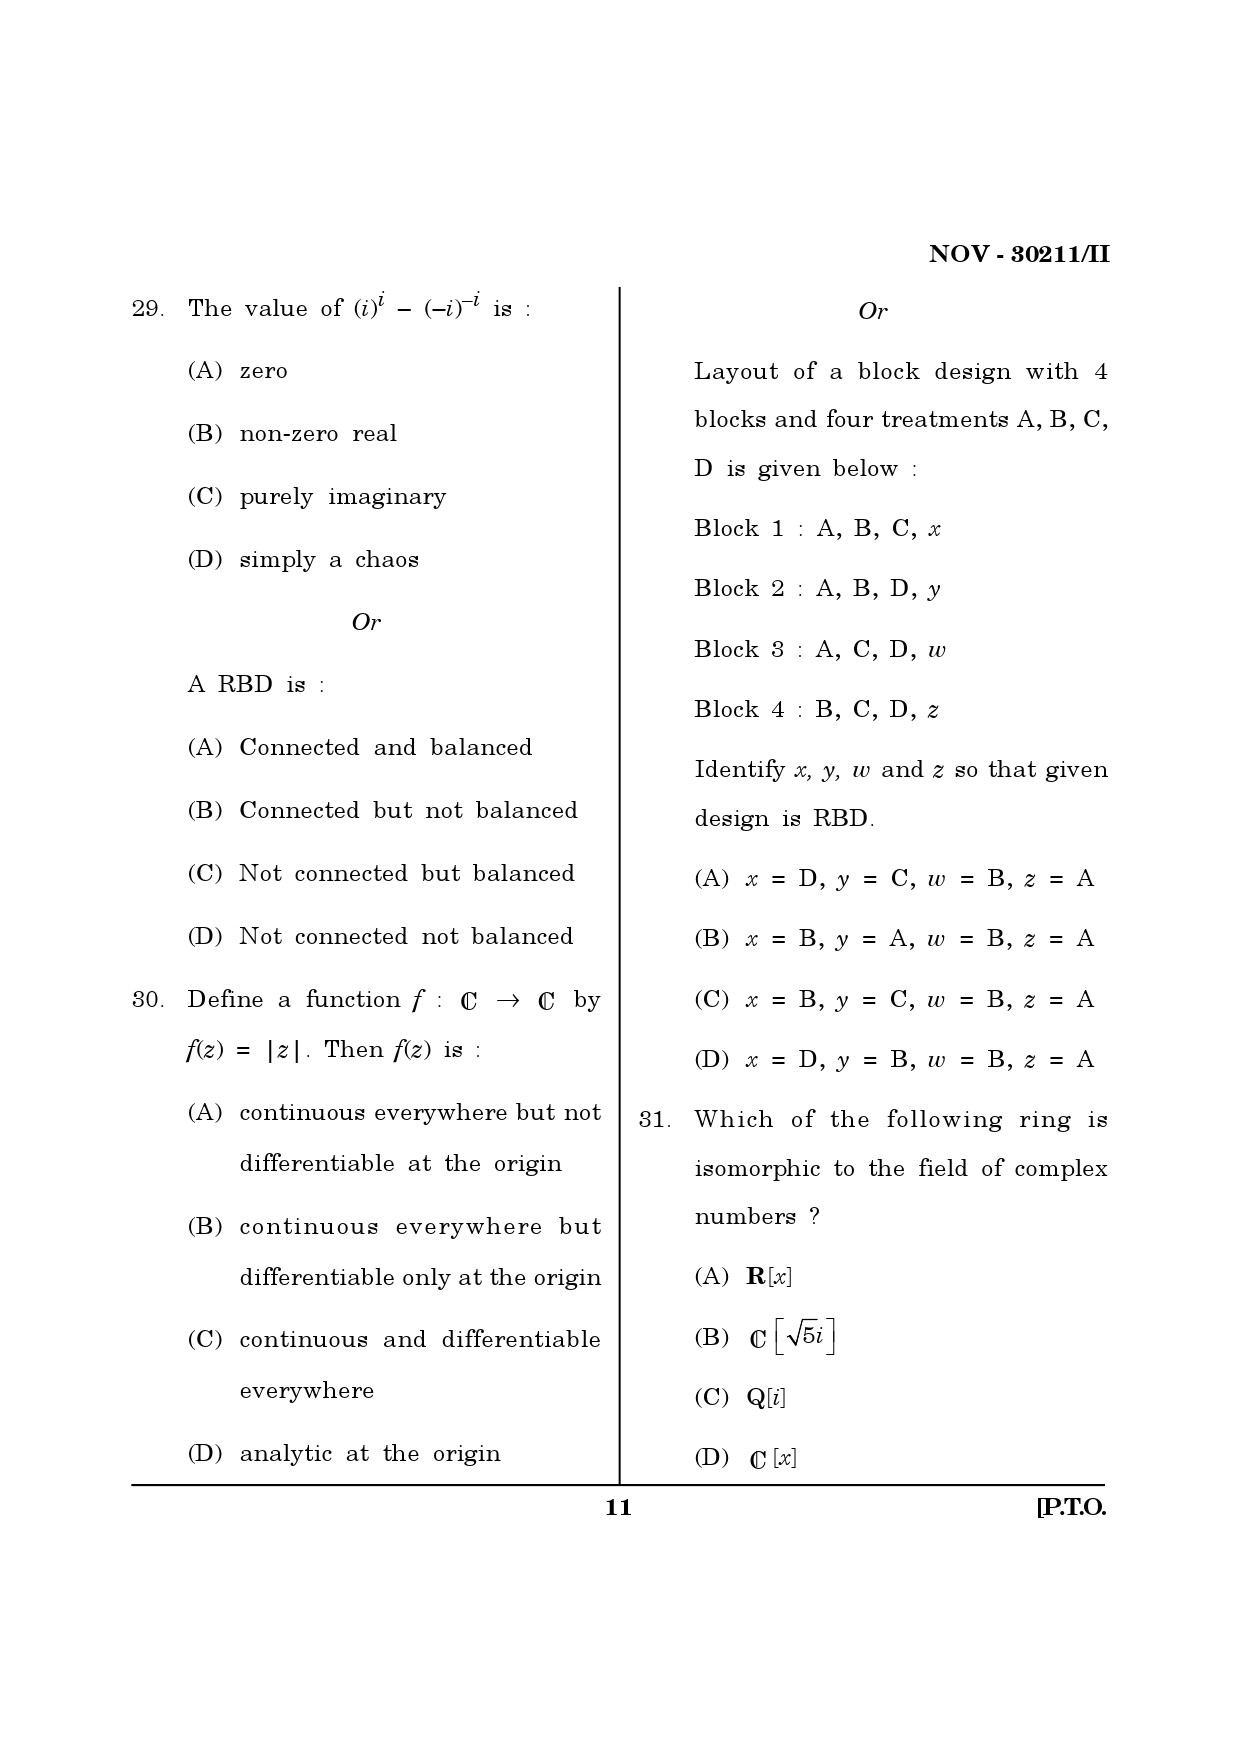 Maharashtra SET Mathematical Sciences Question Paper II November 2011 11